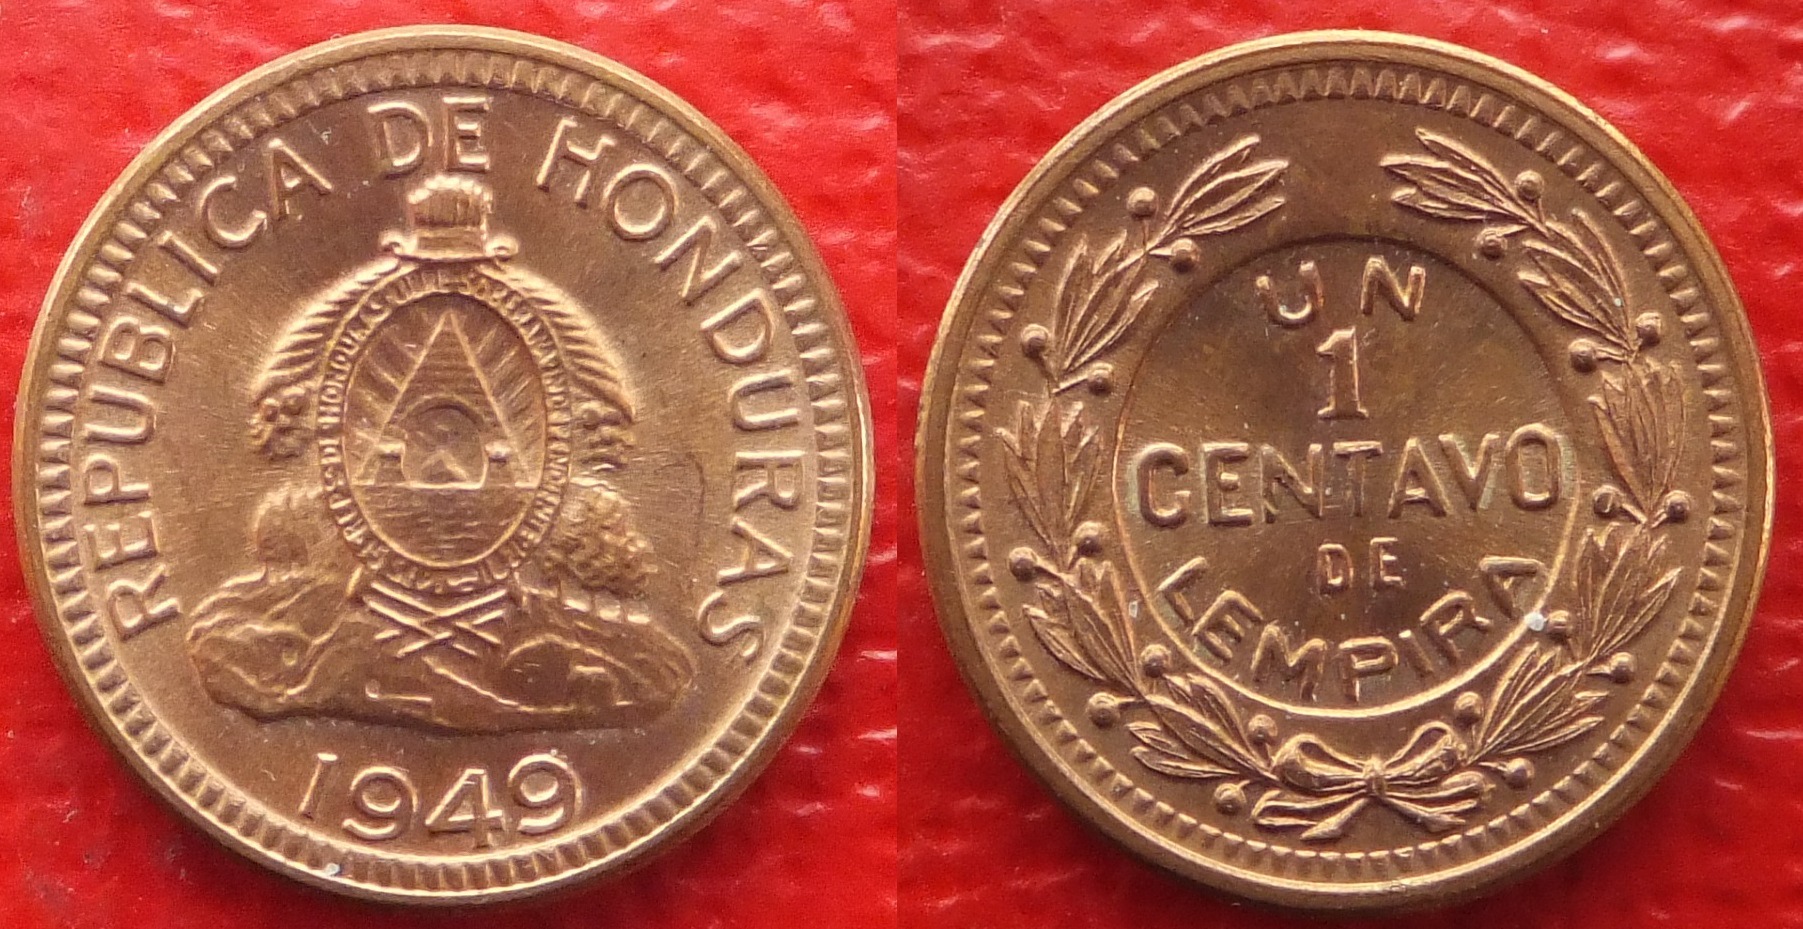 Honduras 1 centavo 1949 (3).jpg